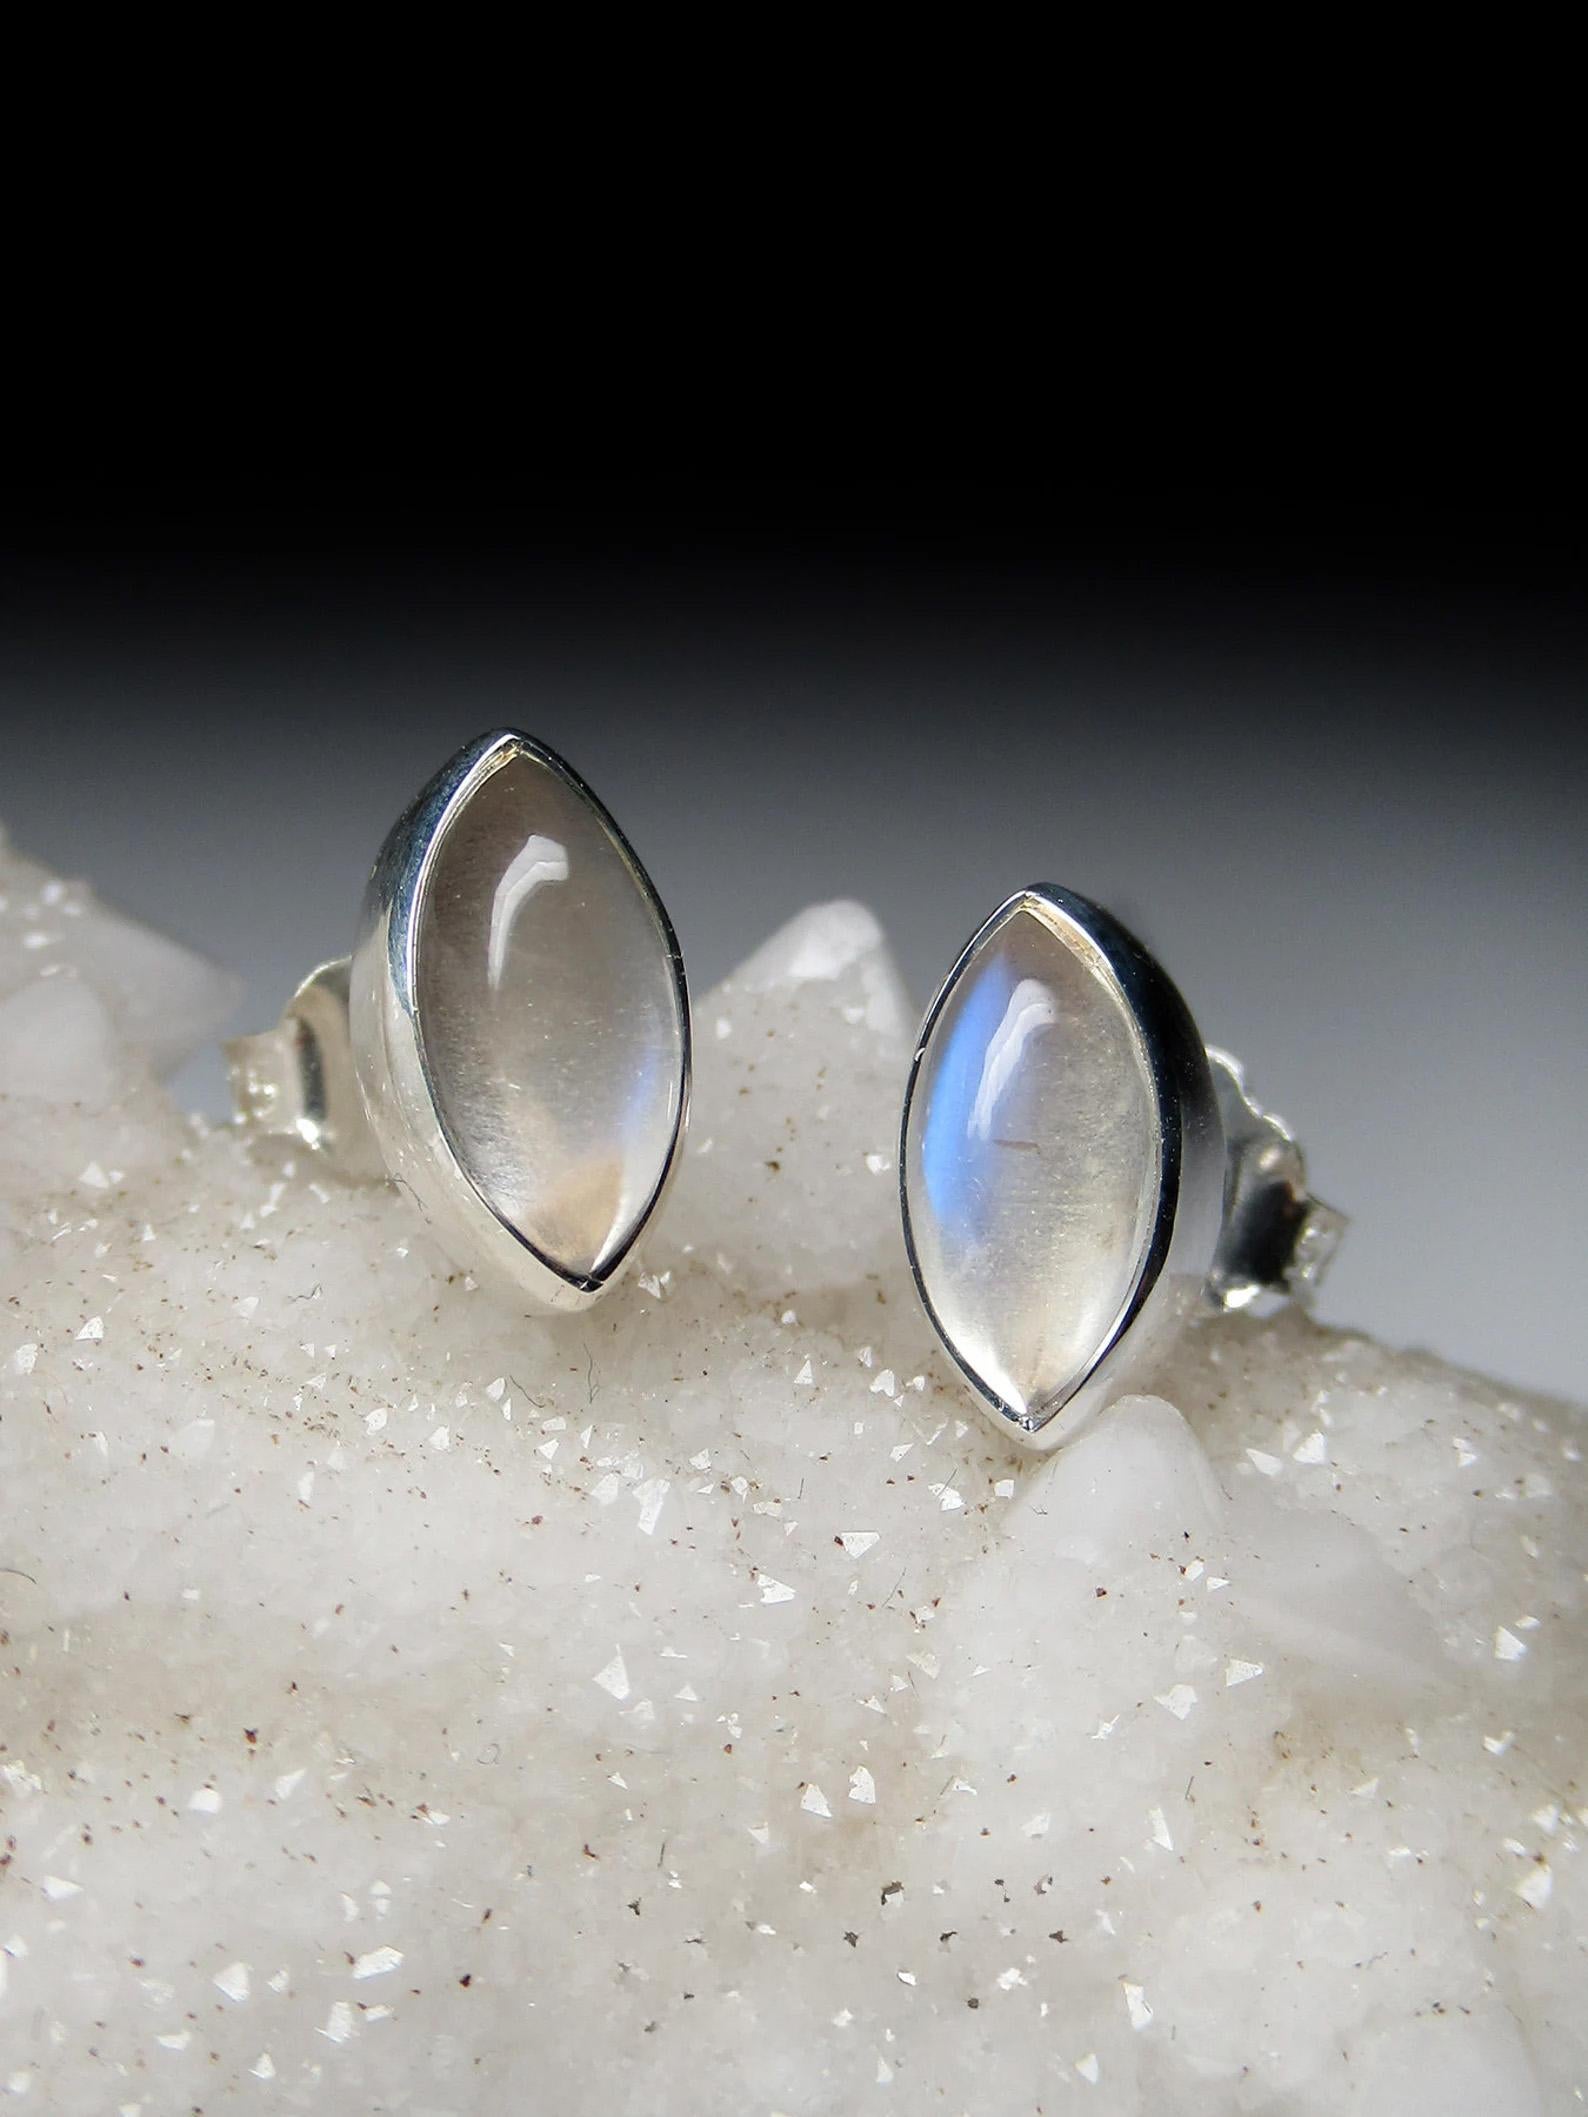 Silver stud earrings with natural Moonstone 
gemstone origin - Sri-Lanka
gem size is 0.16 x 0.2 x 0.39 in / 4 x 5 x 10 mm
moonstone weight - 2.40 carat
earrings weight - 1.99 grams